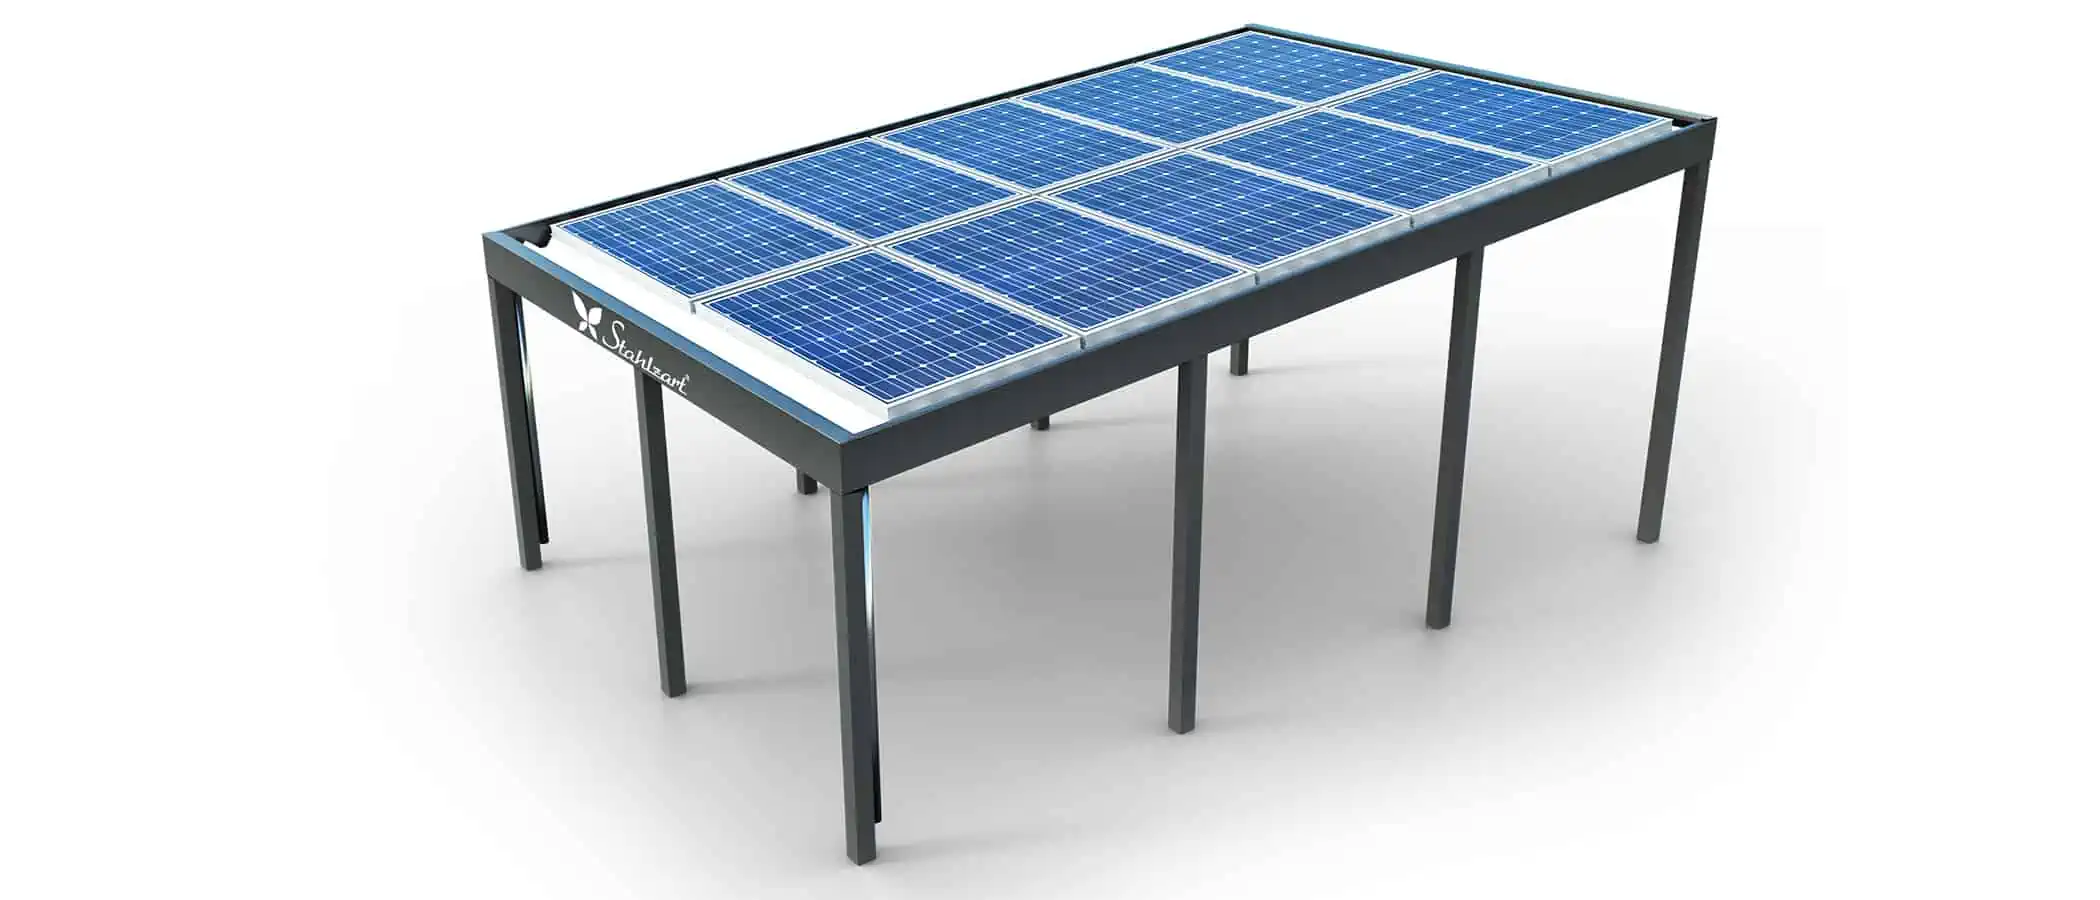 solar-carport-mit-pultdach-carports-solarcarport-pultdach-carportdach-design-strom-angebot-photovoltaikanlage-module-solardach-dachflaeche-metall-stahl-doppelcarport-offen-modern-stahlzart